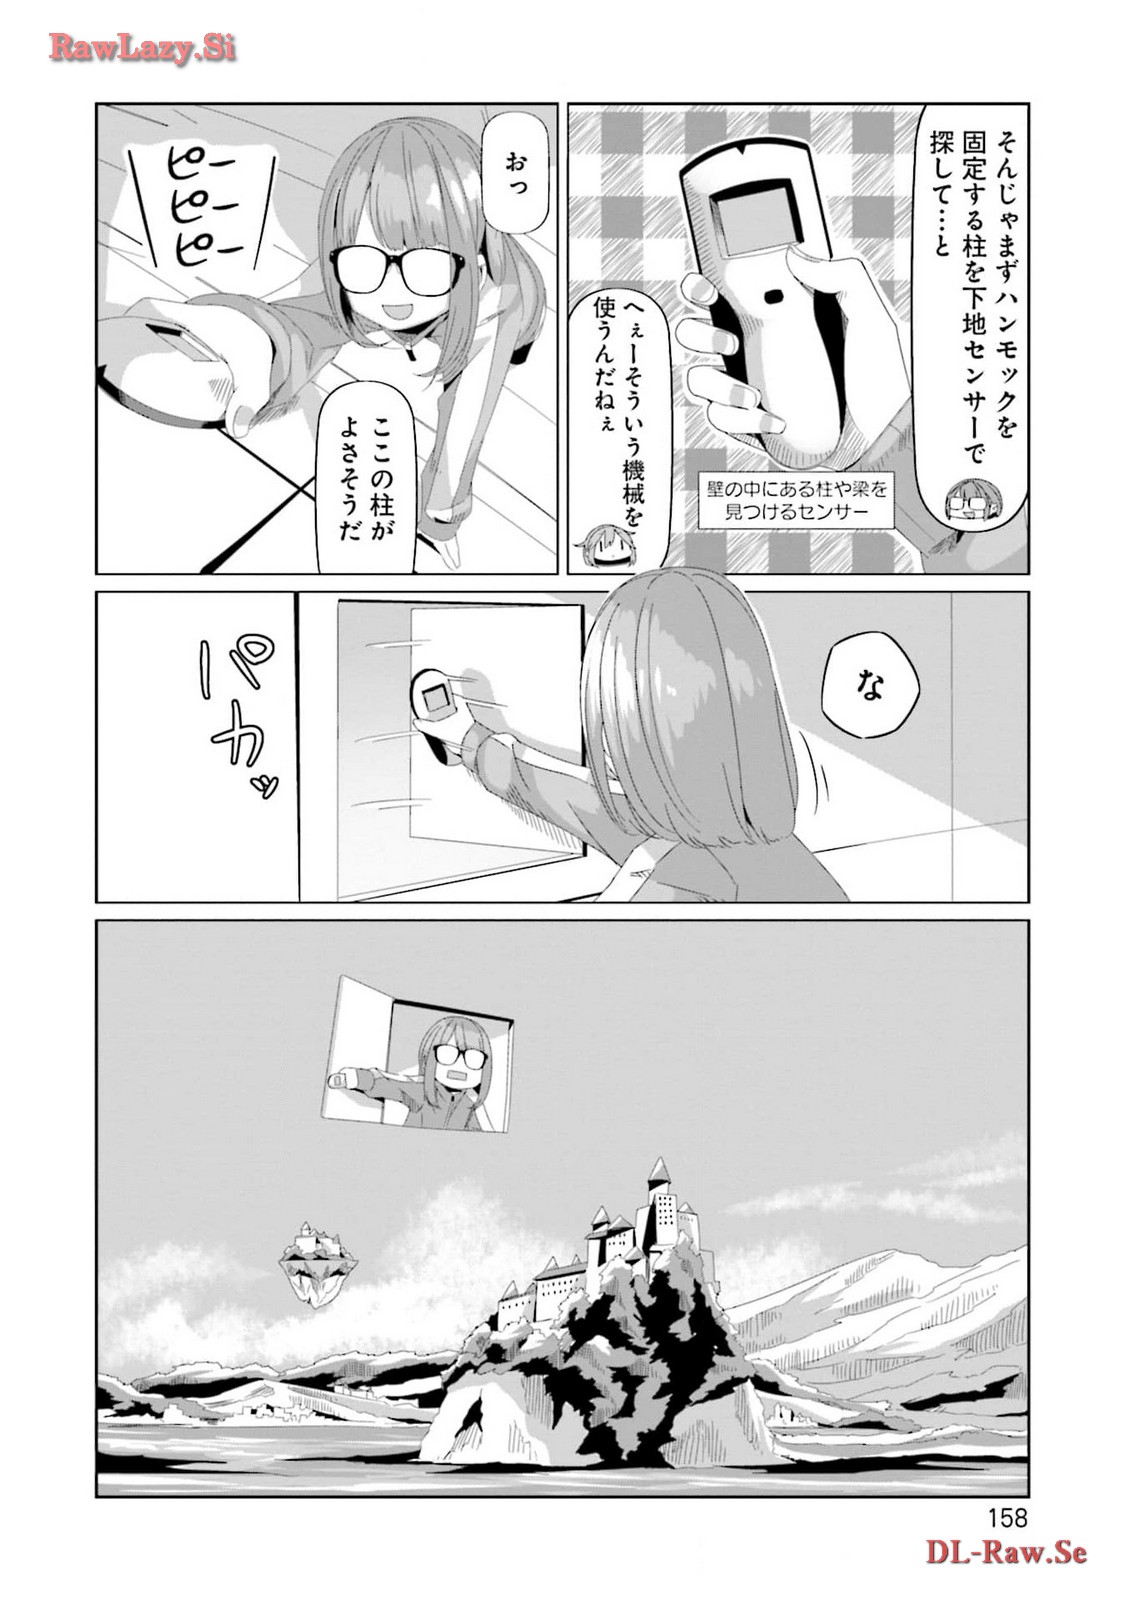 Yuru Camp - Chapter 95.5 - Page 2